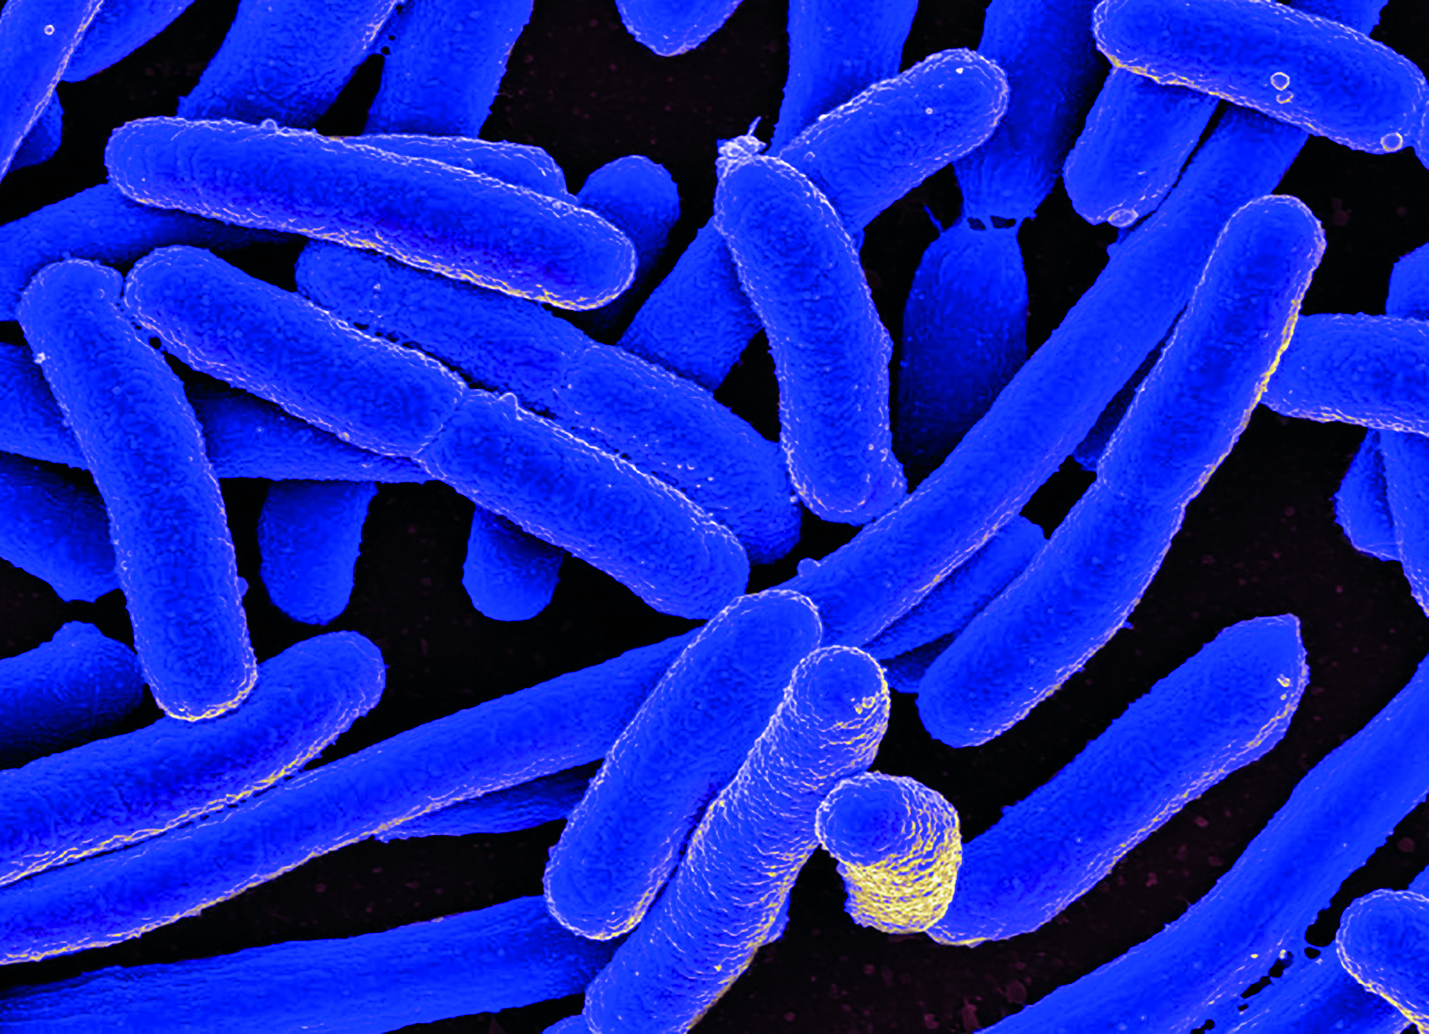 Obr. 2 Bakterie Escherichia coli pod elektronovým mikroskopem [16]